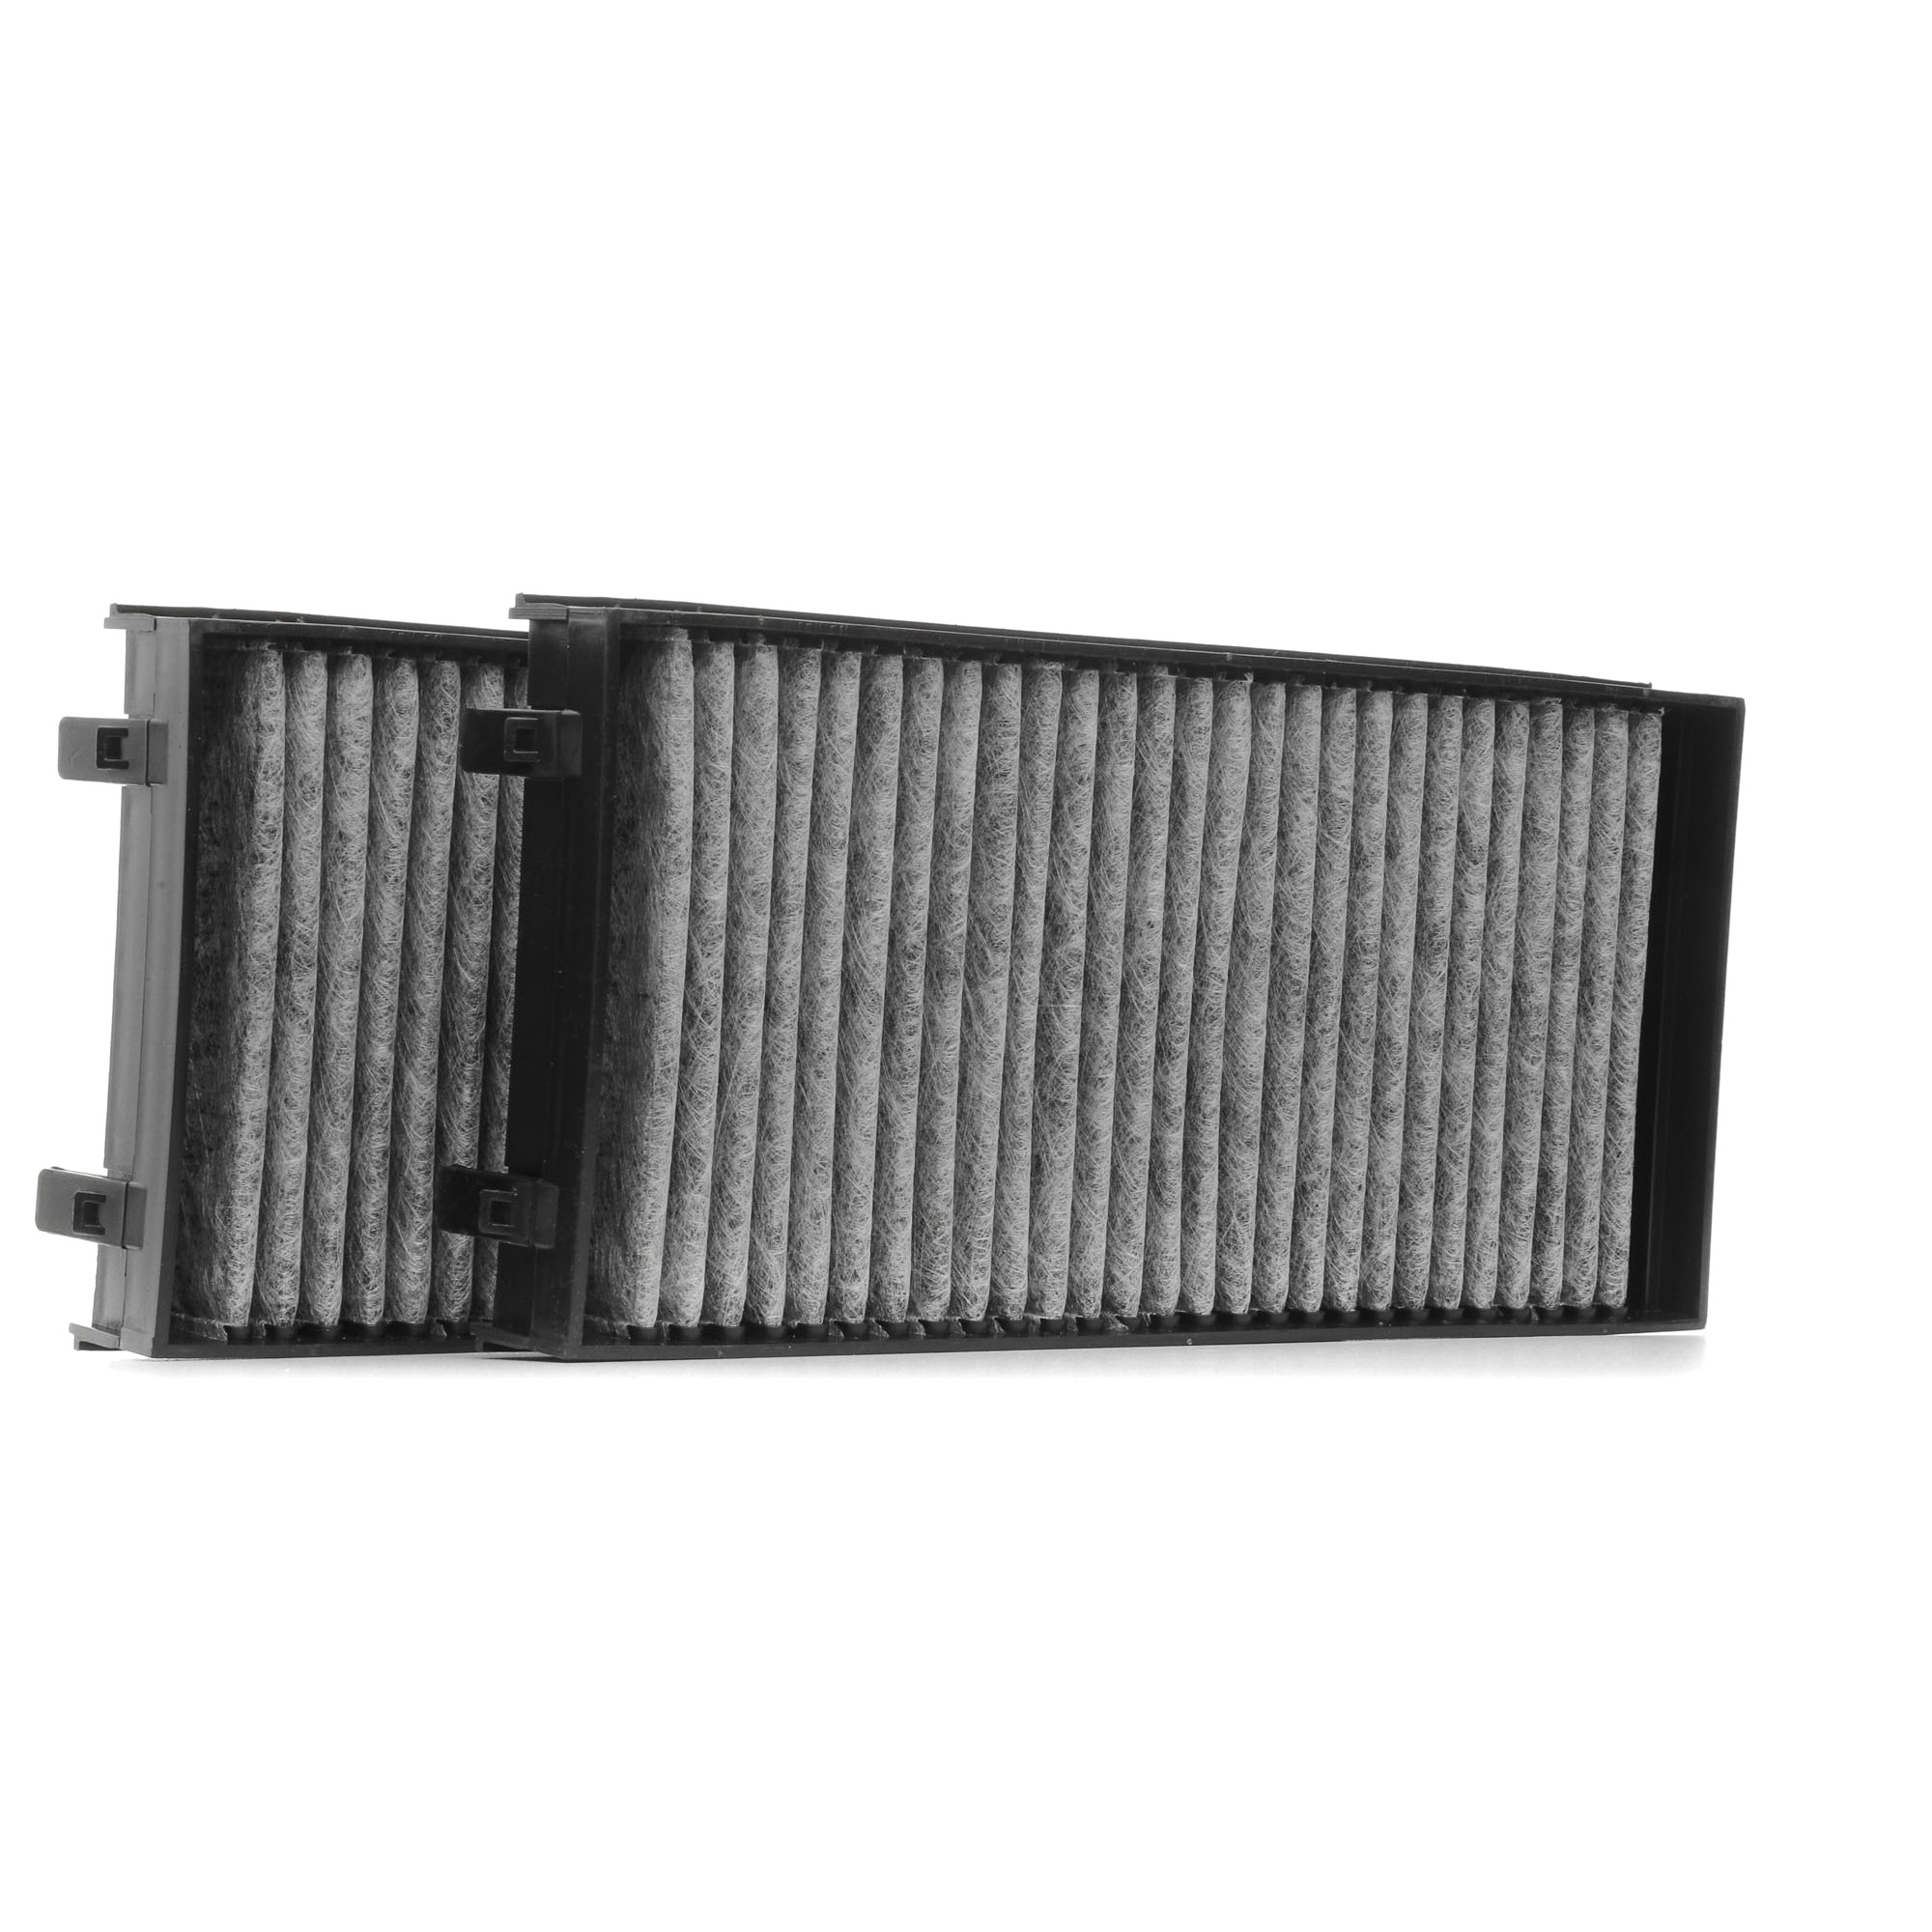 RIDEX 424I0205 Pollen filter Activated Carbon Filter, 293 mm x 140 mm x 34 mm